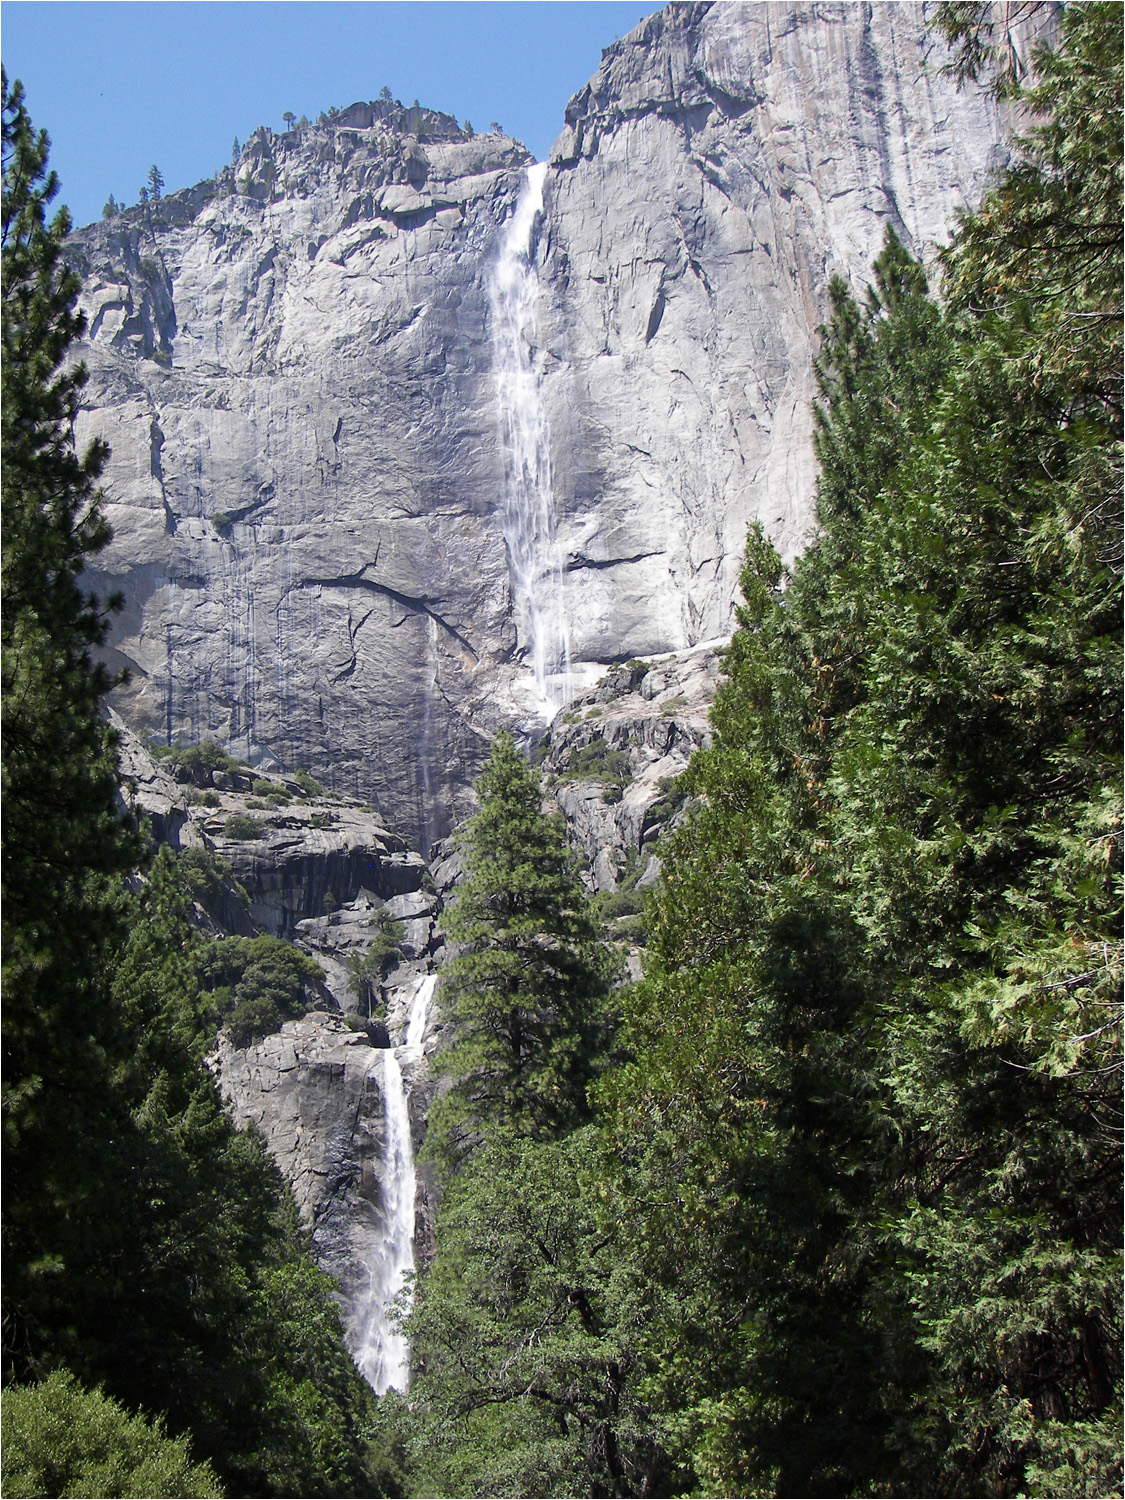 Views of Upper and Lower Yosemite Falls